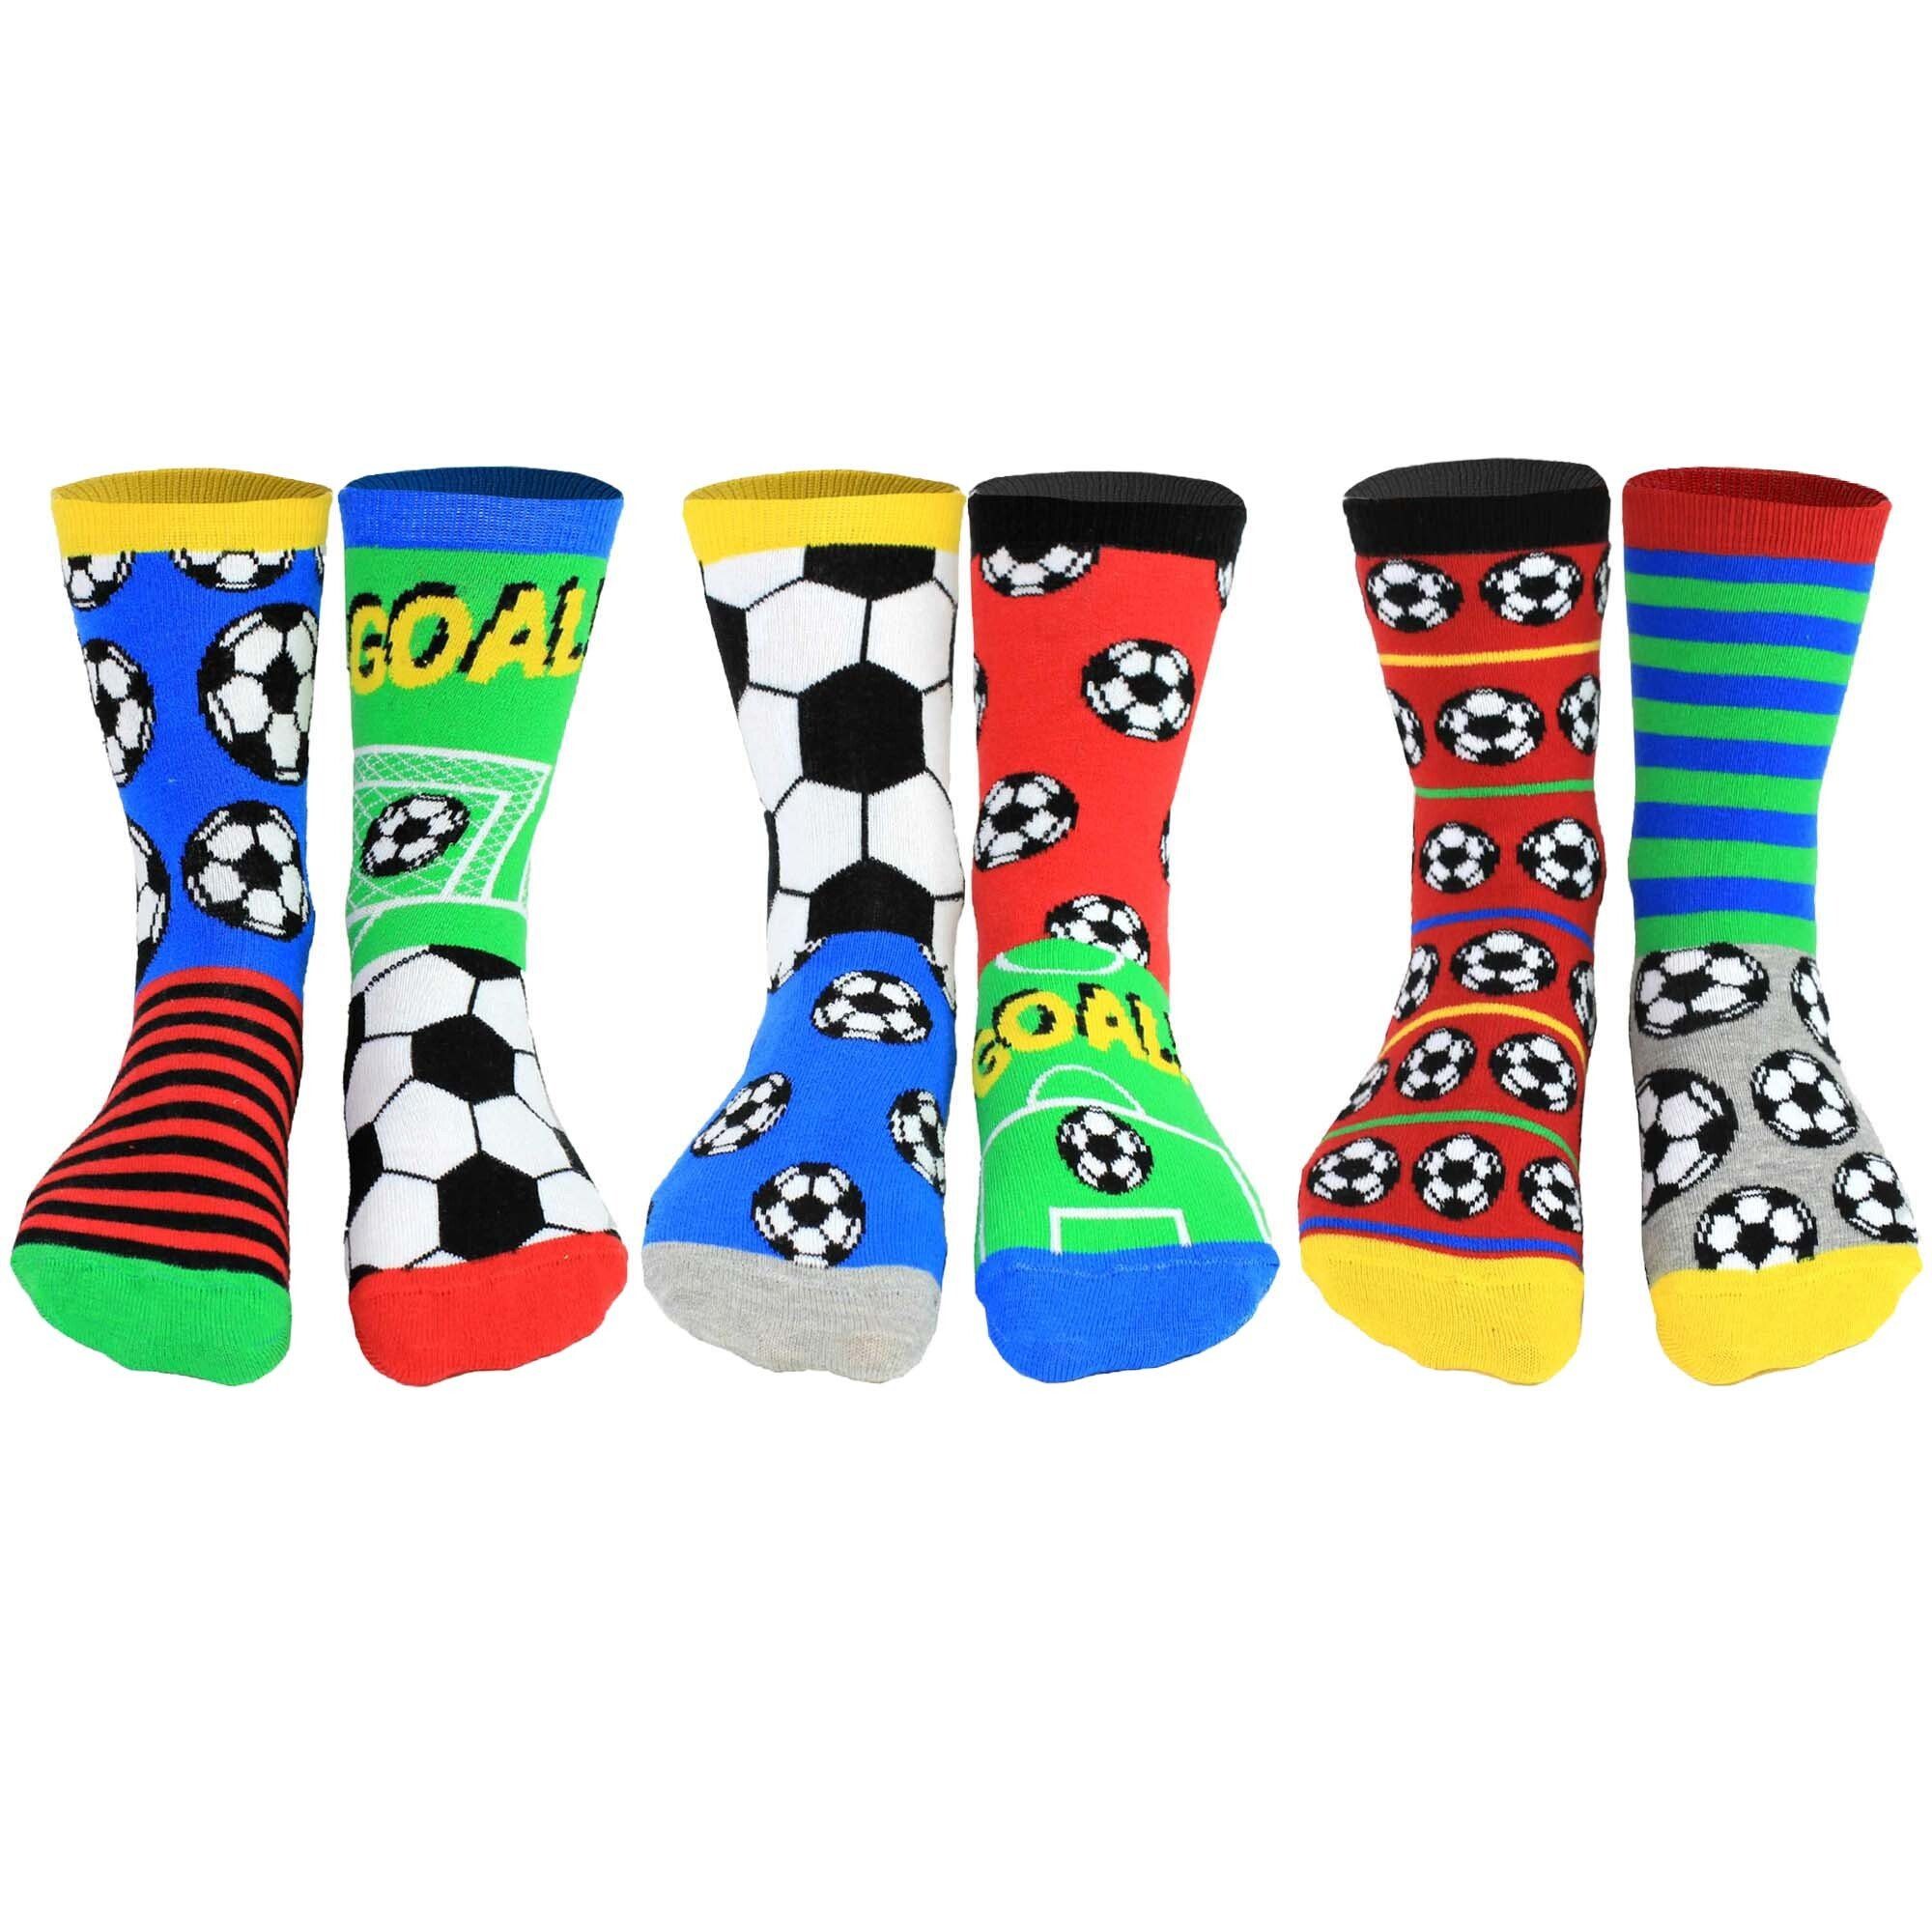 Oddsocks It! Socken Kick Freizeitsocken Socken, 6 Kinder individuelle United -